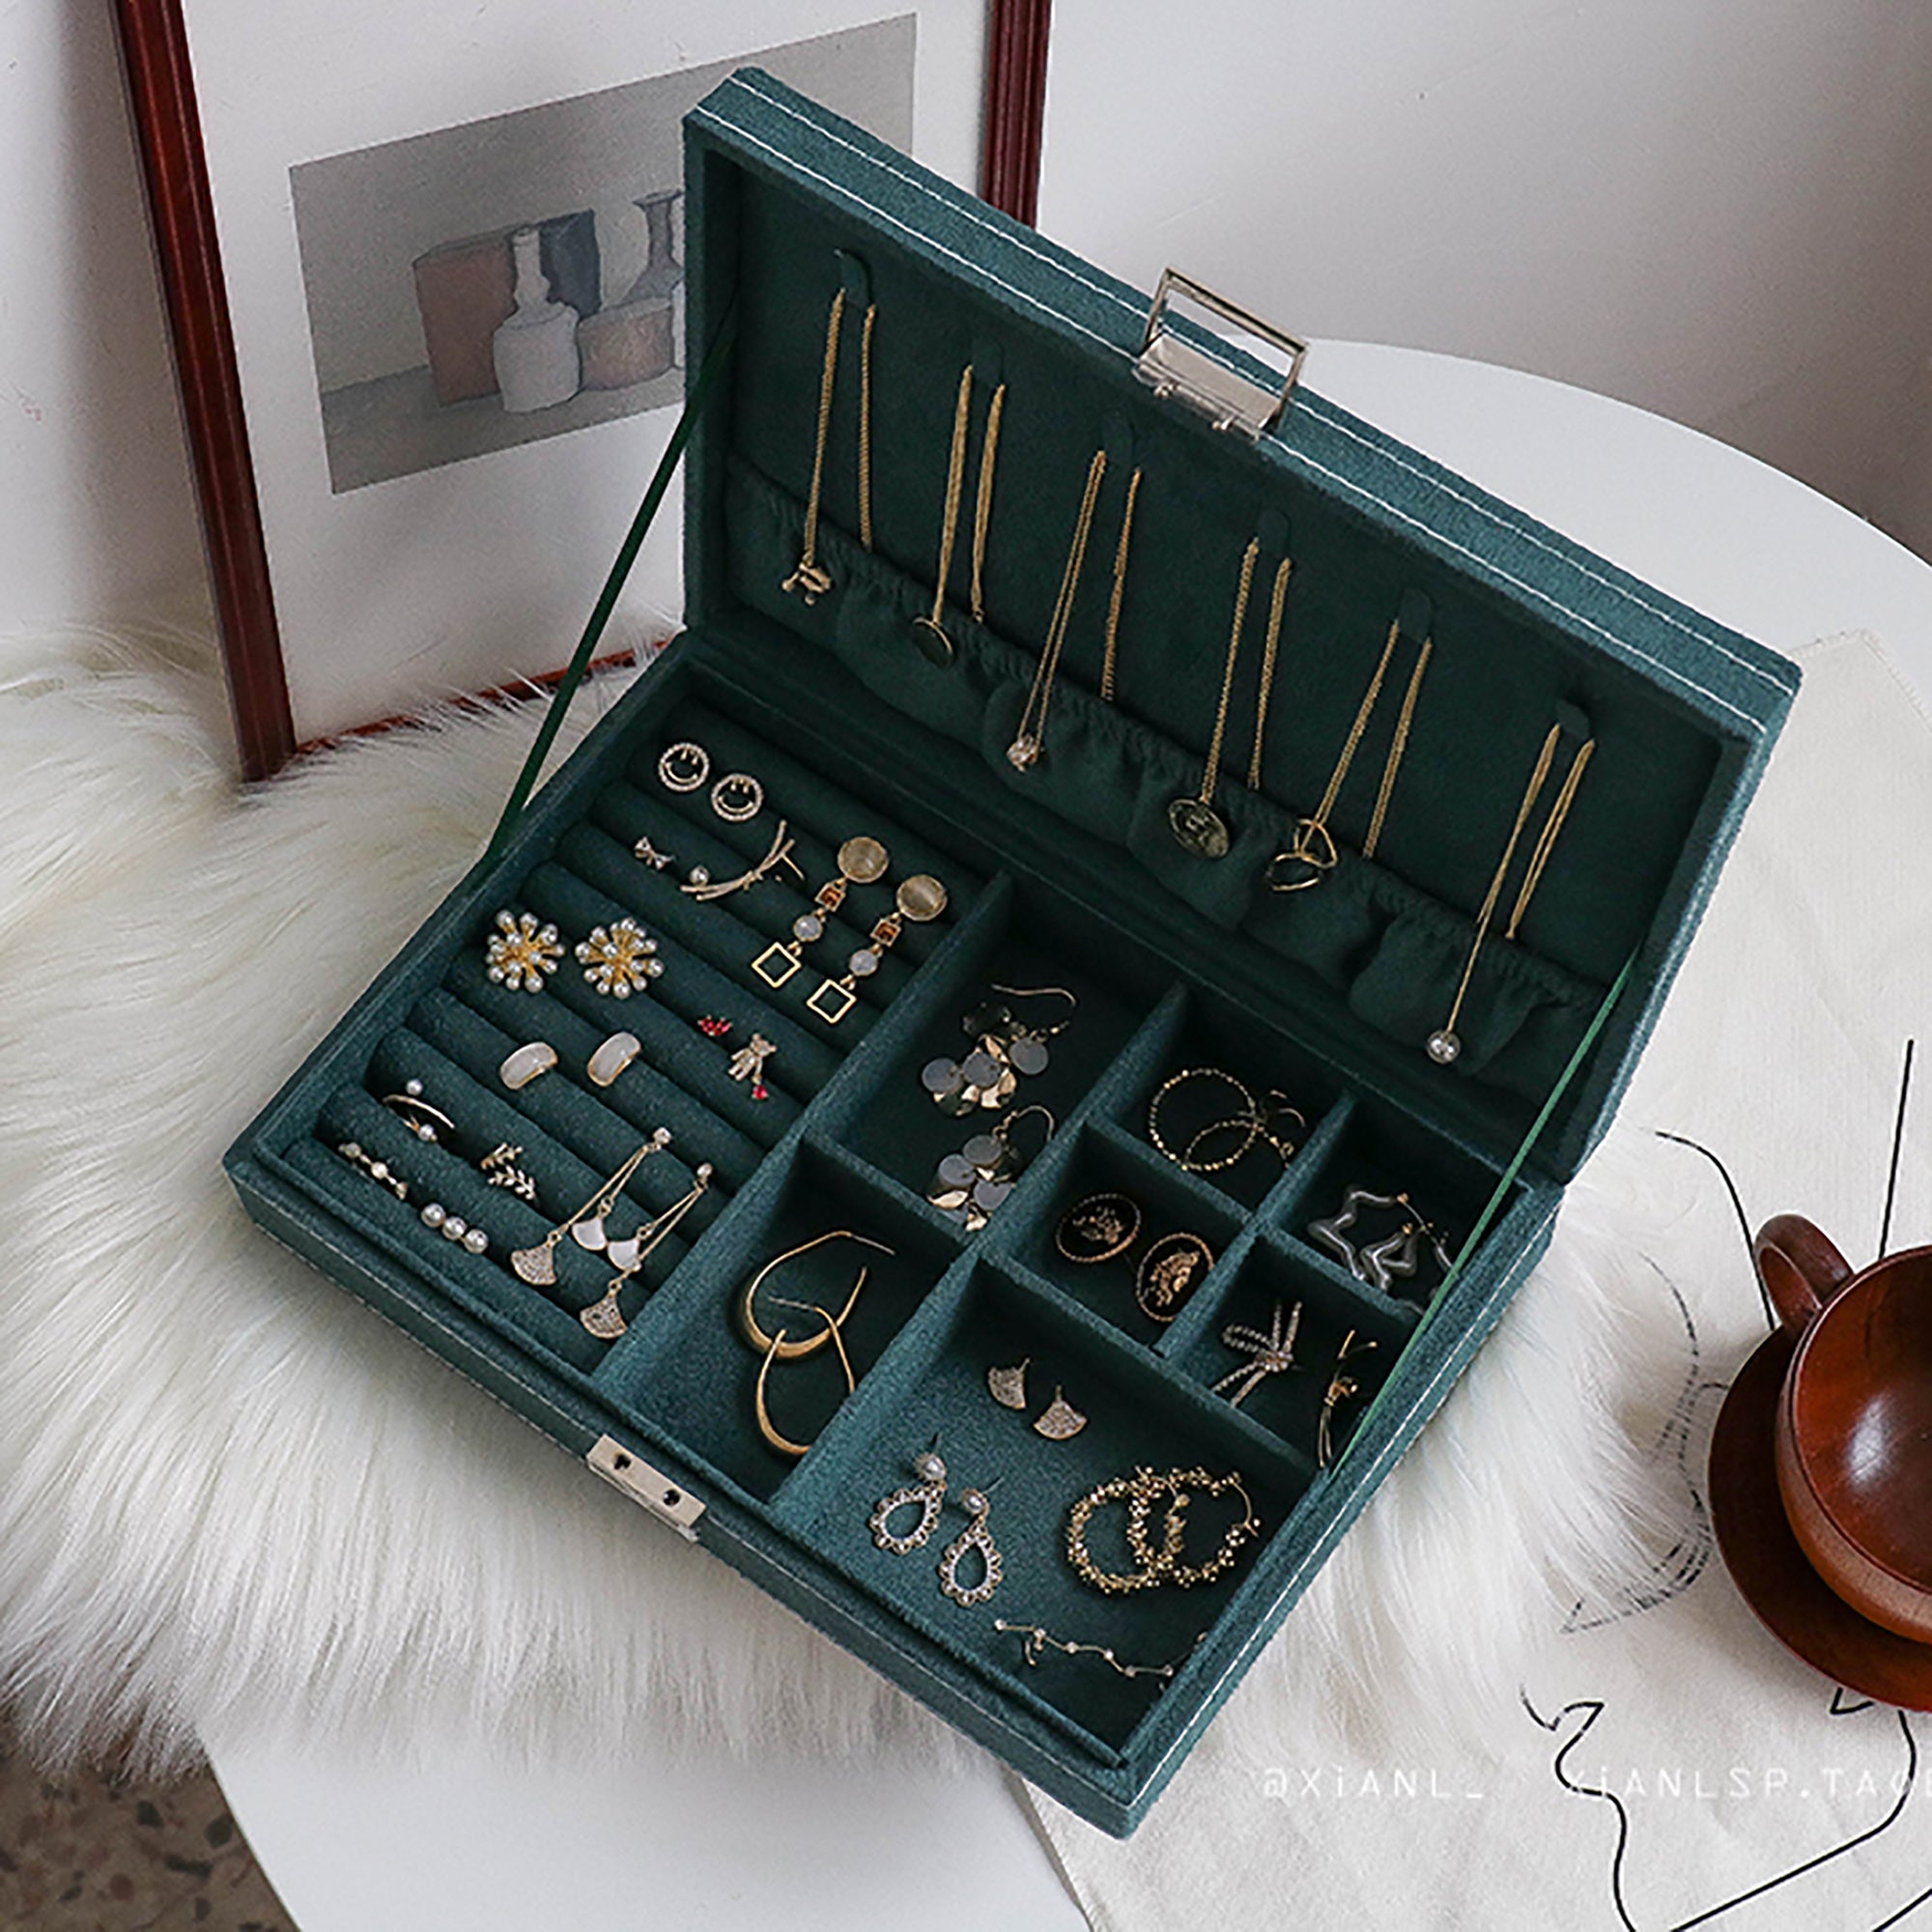 Jewelry Box Organizer Bags Set Vintage Gift Case Home Deco Decoration Design Gift wedding influencer styling KOL / Youtuber / Celebrity / Fashion Icon